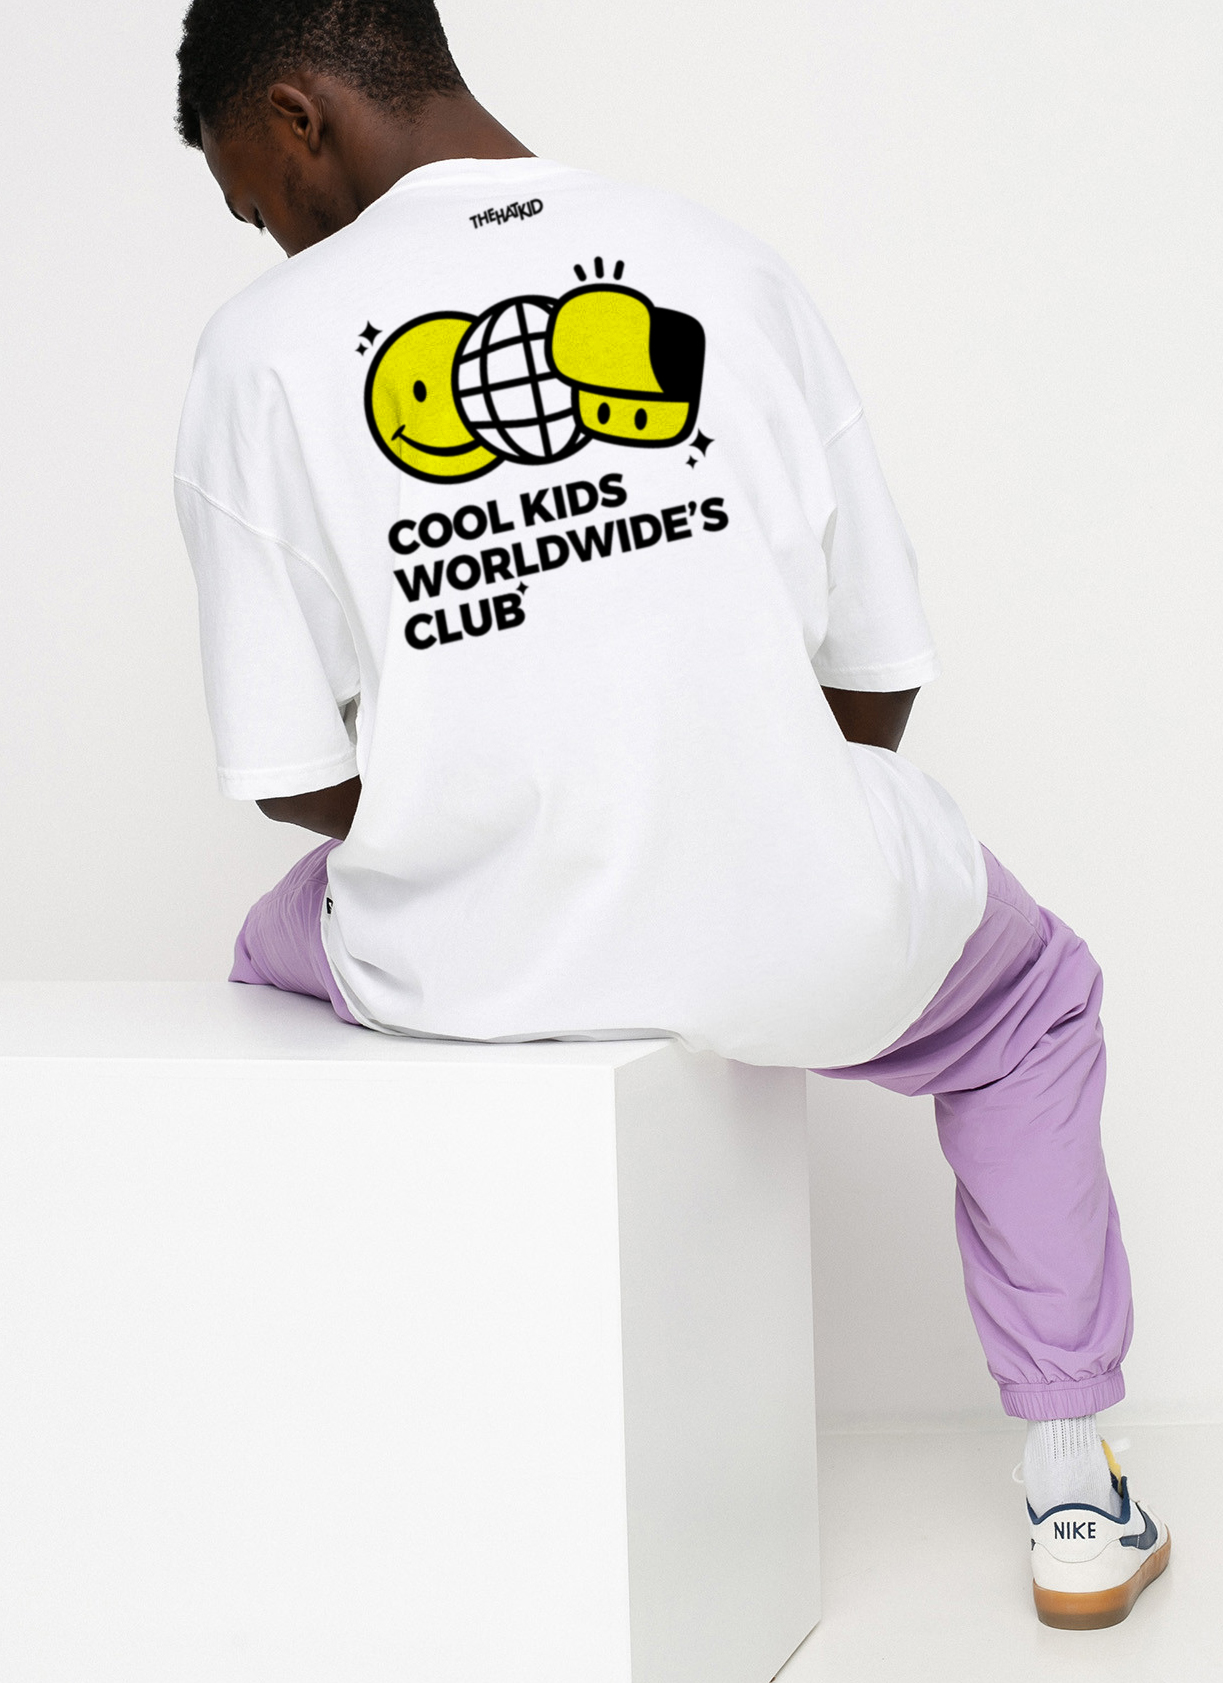 COOL T-Shirt – HATKID WORLDWIDE\'S KIDS CLUB” THE